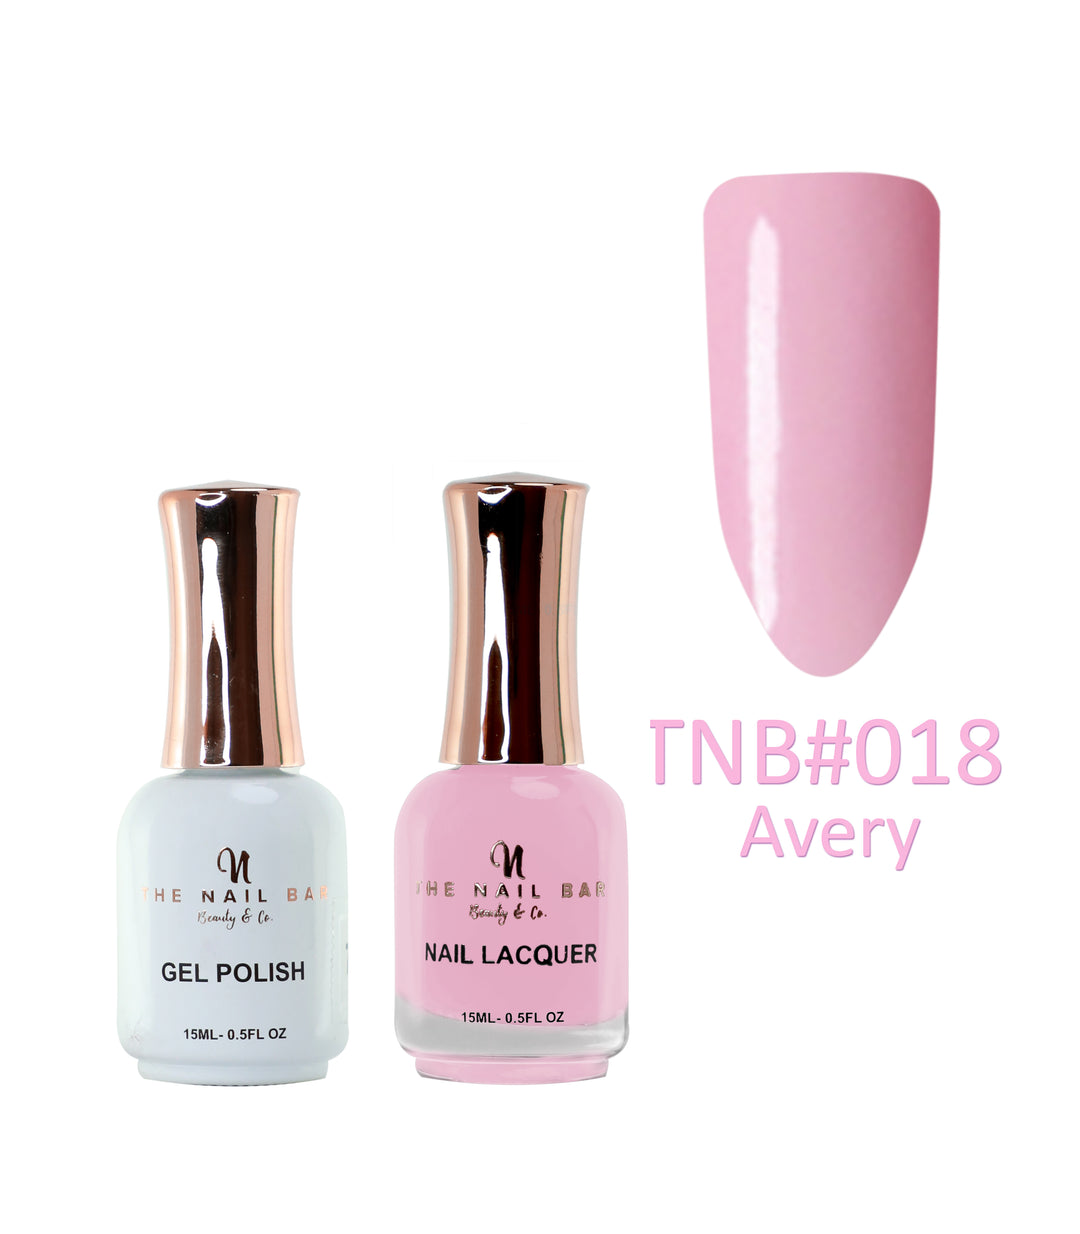 Dual Polish/Gel colour matching (15ml) - Avery - The Nail Bar Beauty & Co.